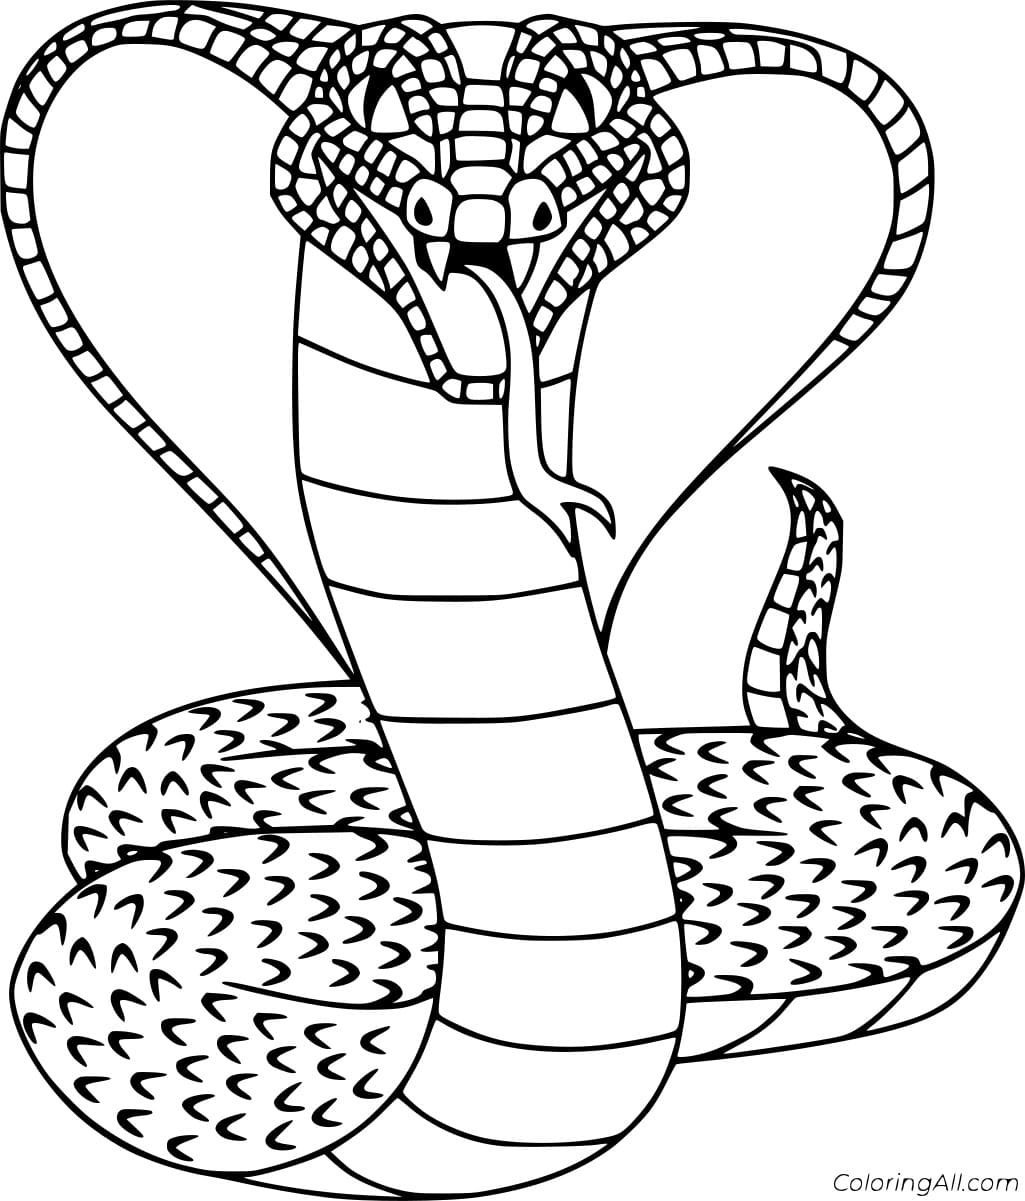 Раскраски со змеями